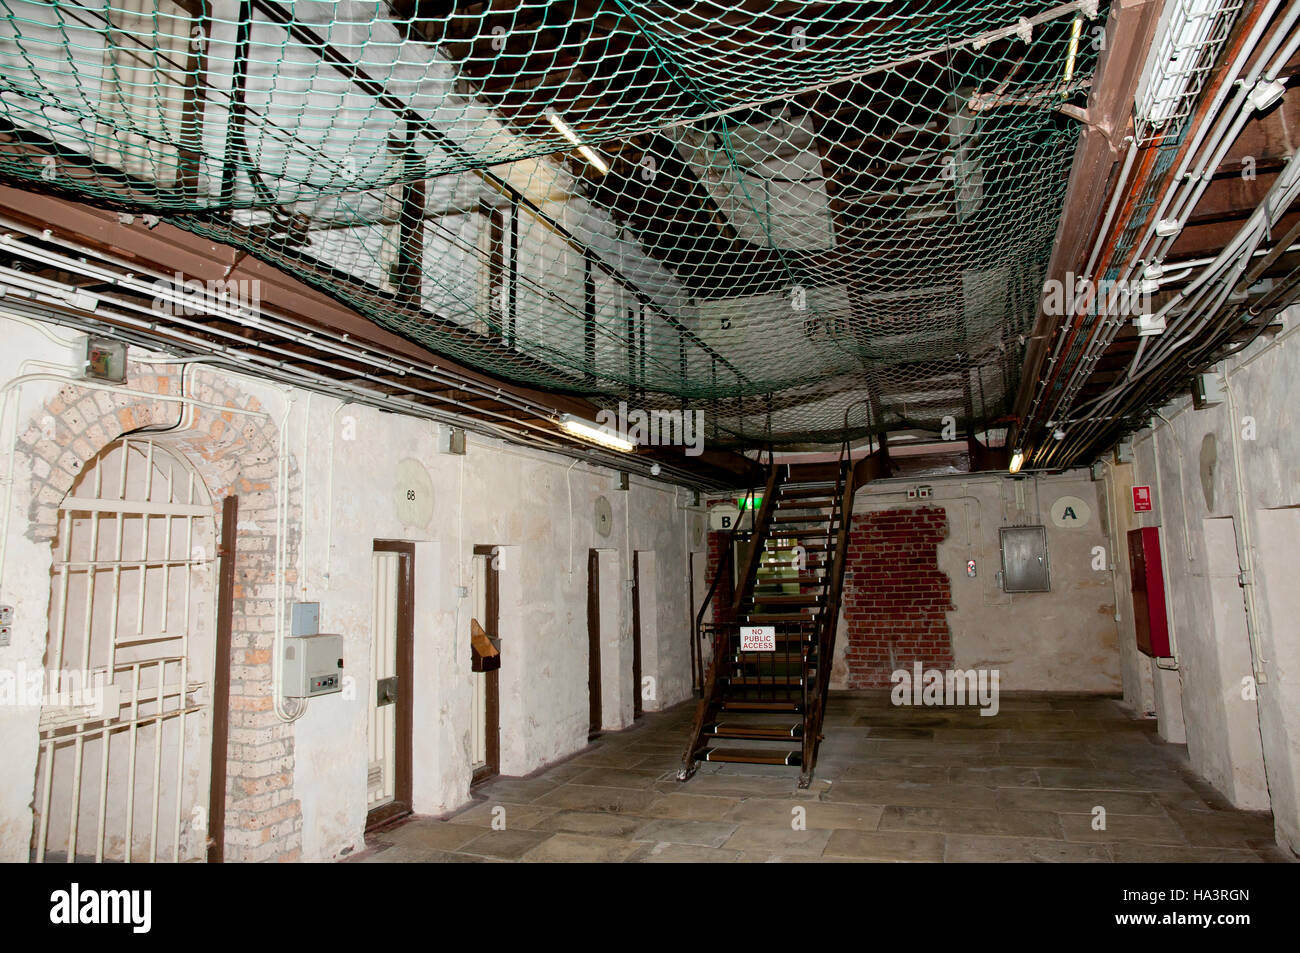 Fremantle alten Gefängnis Korridor - Australien Stockfoto